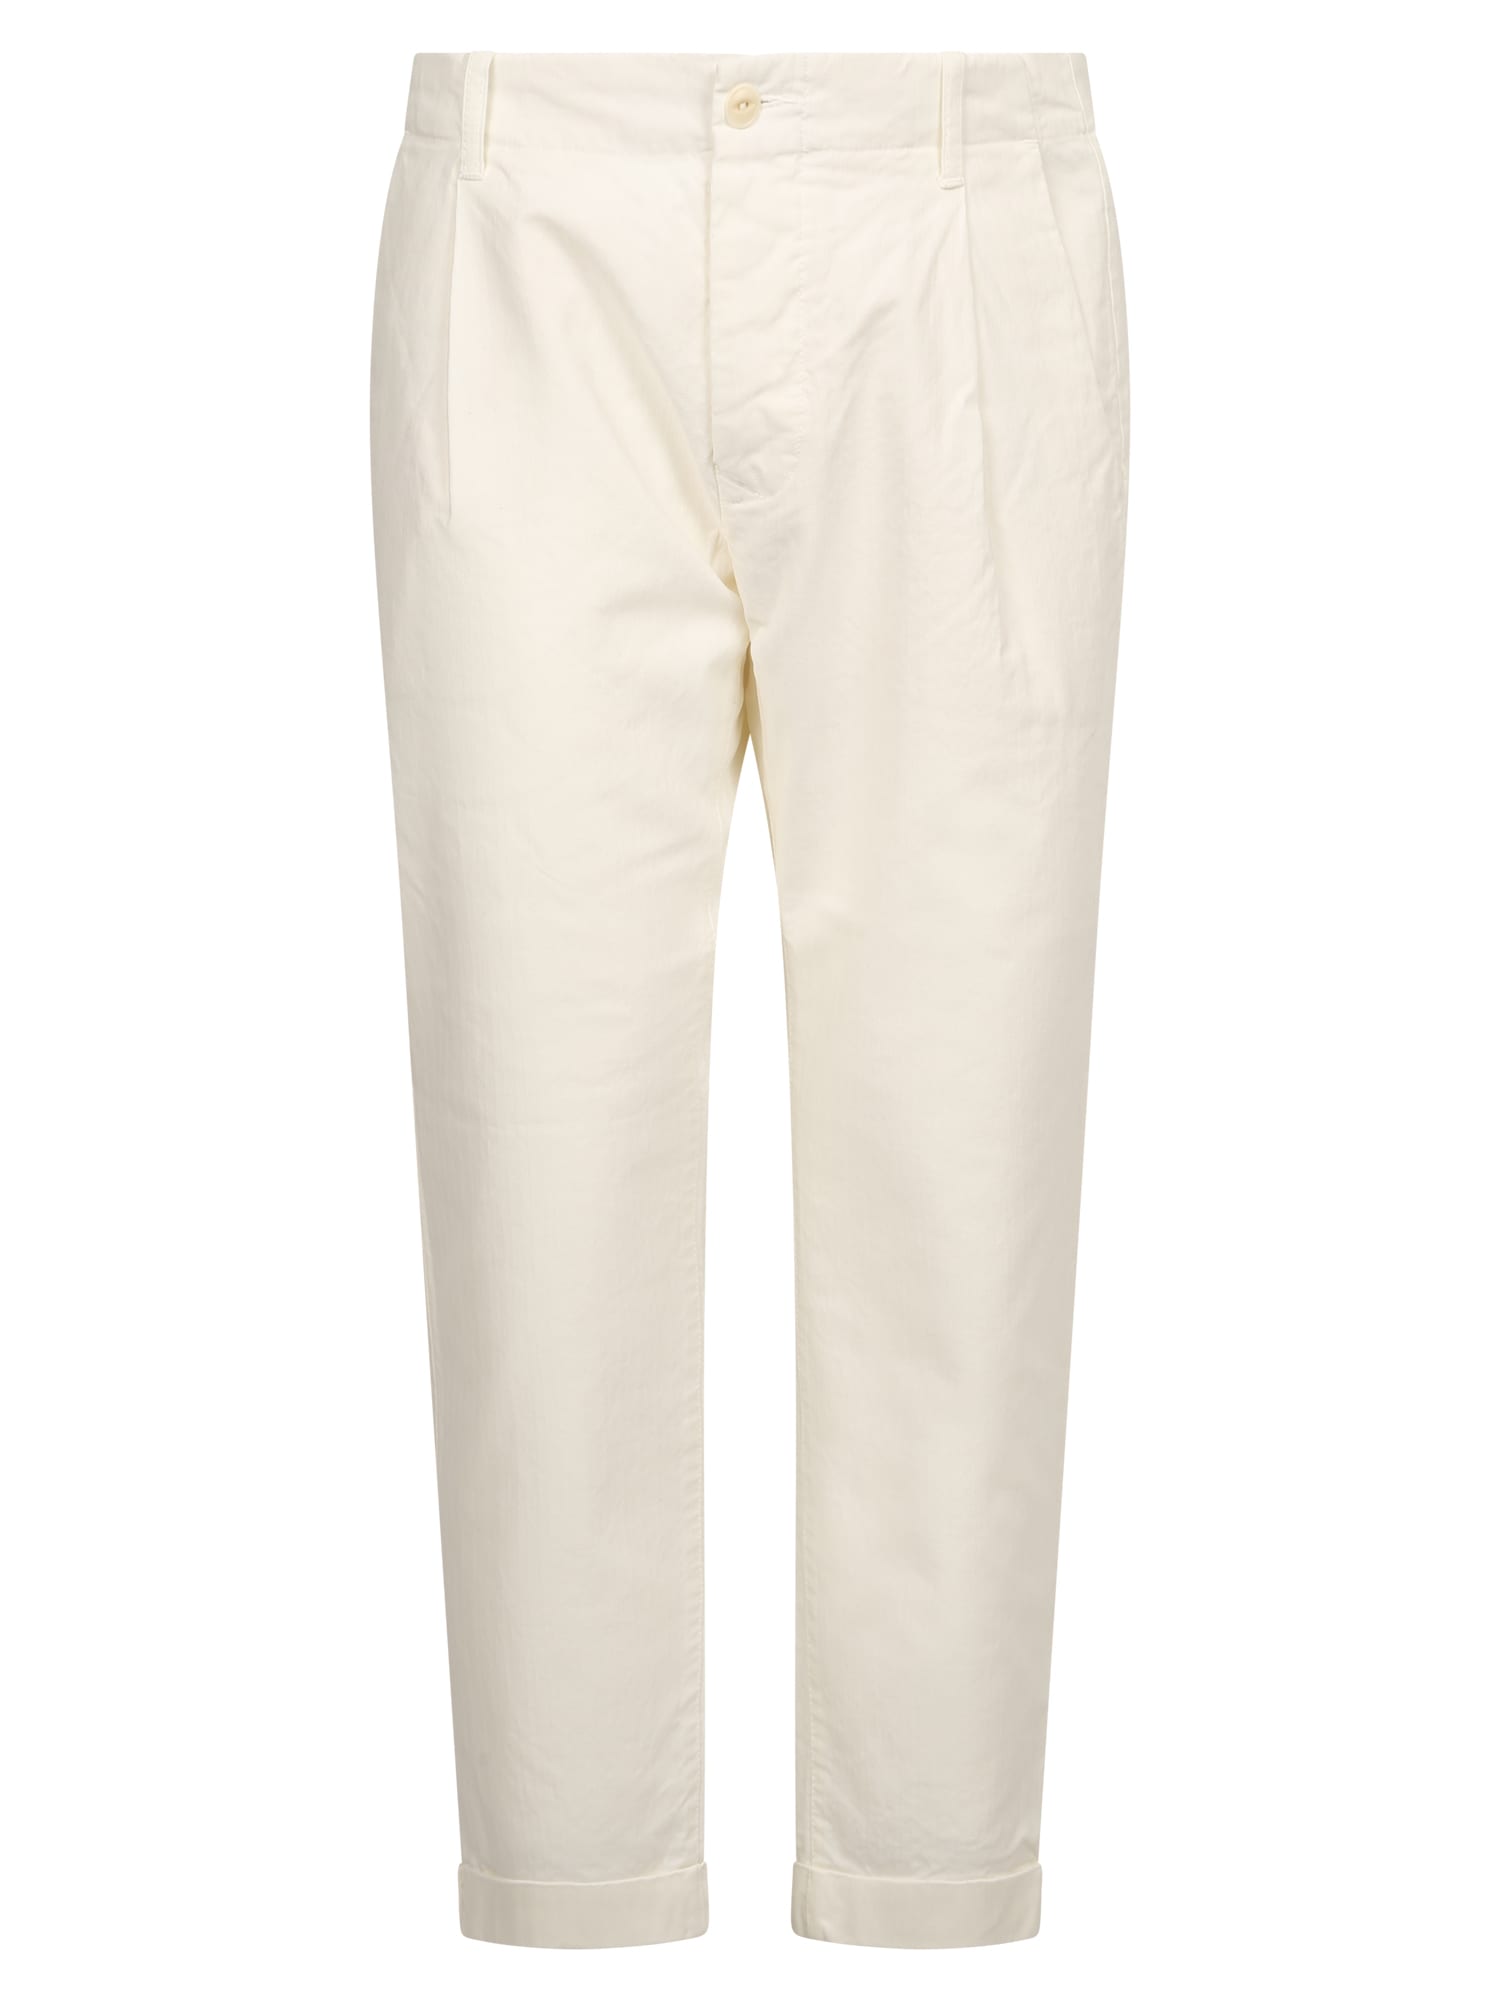 Shop Original Vintage Style White Trousers